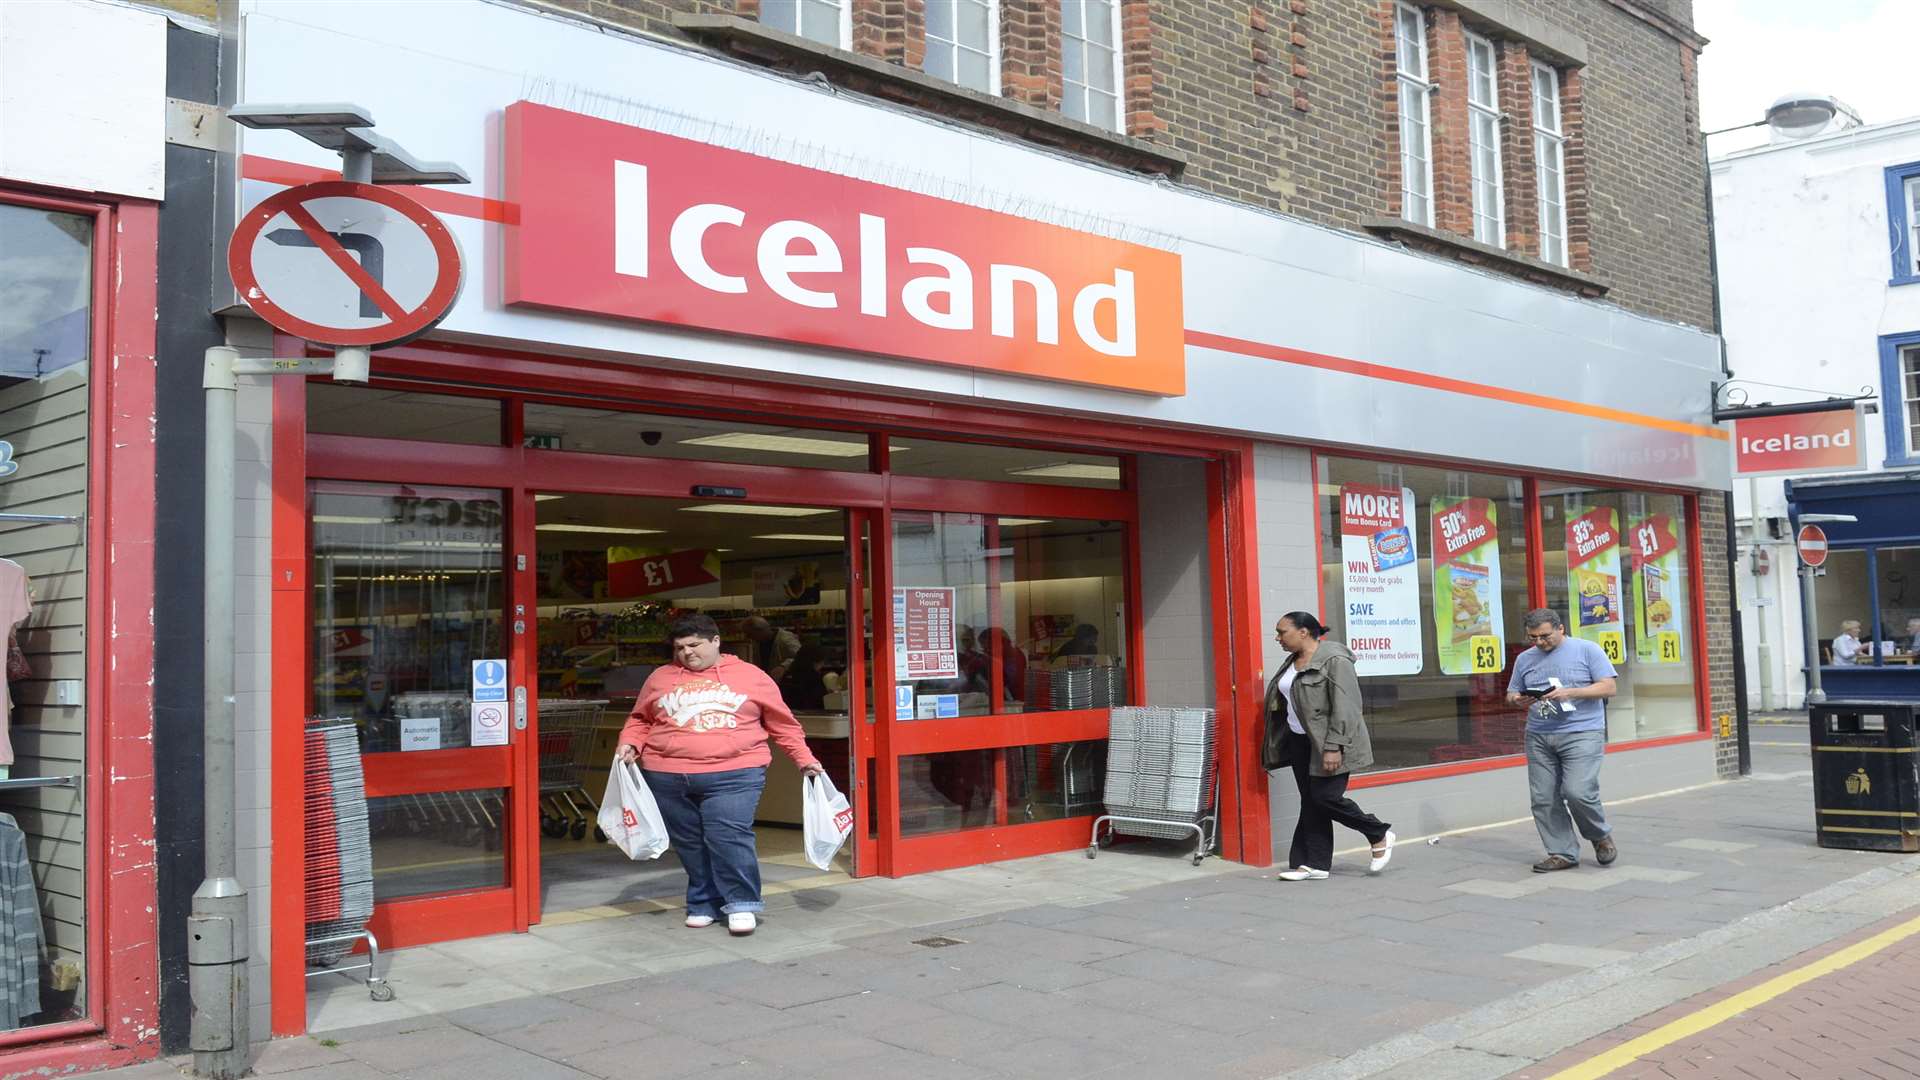 The Iceland store in Mortimer Street, Herne Bay